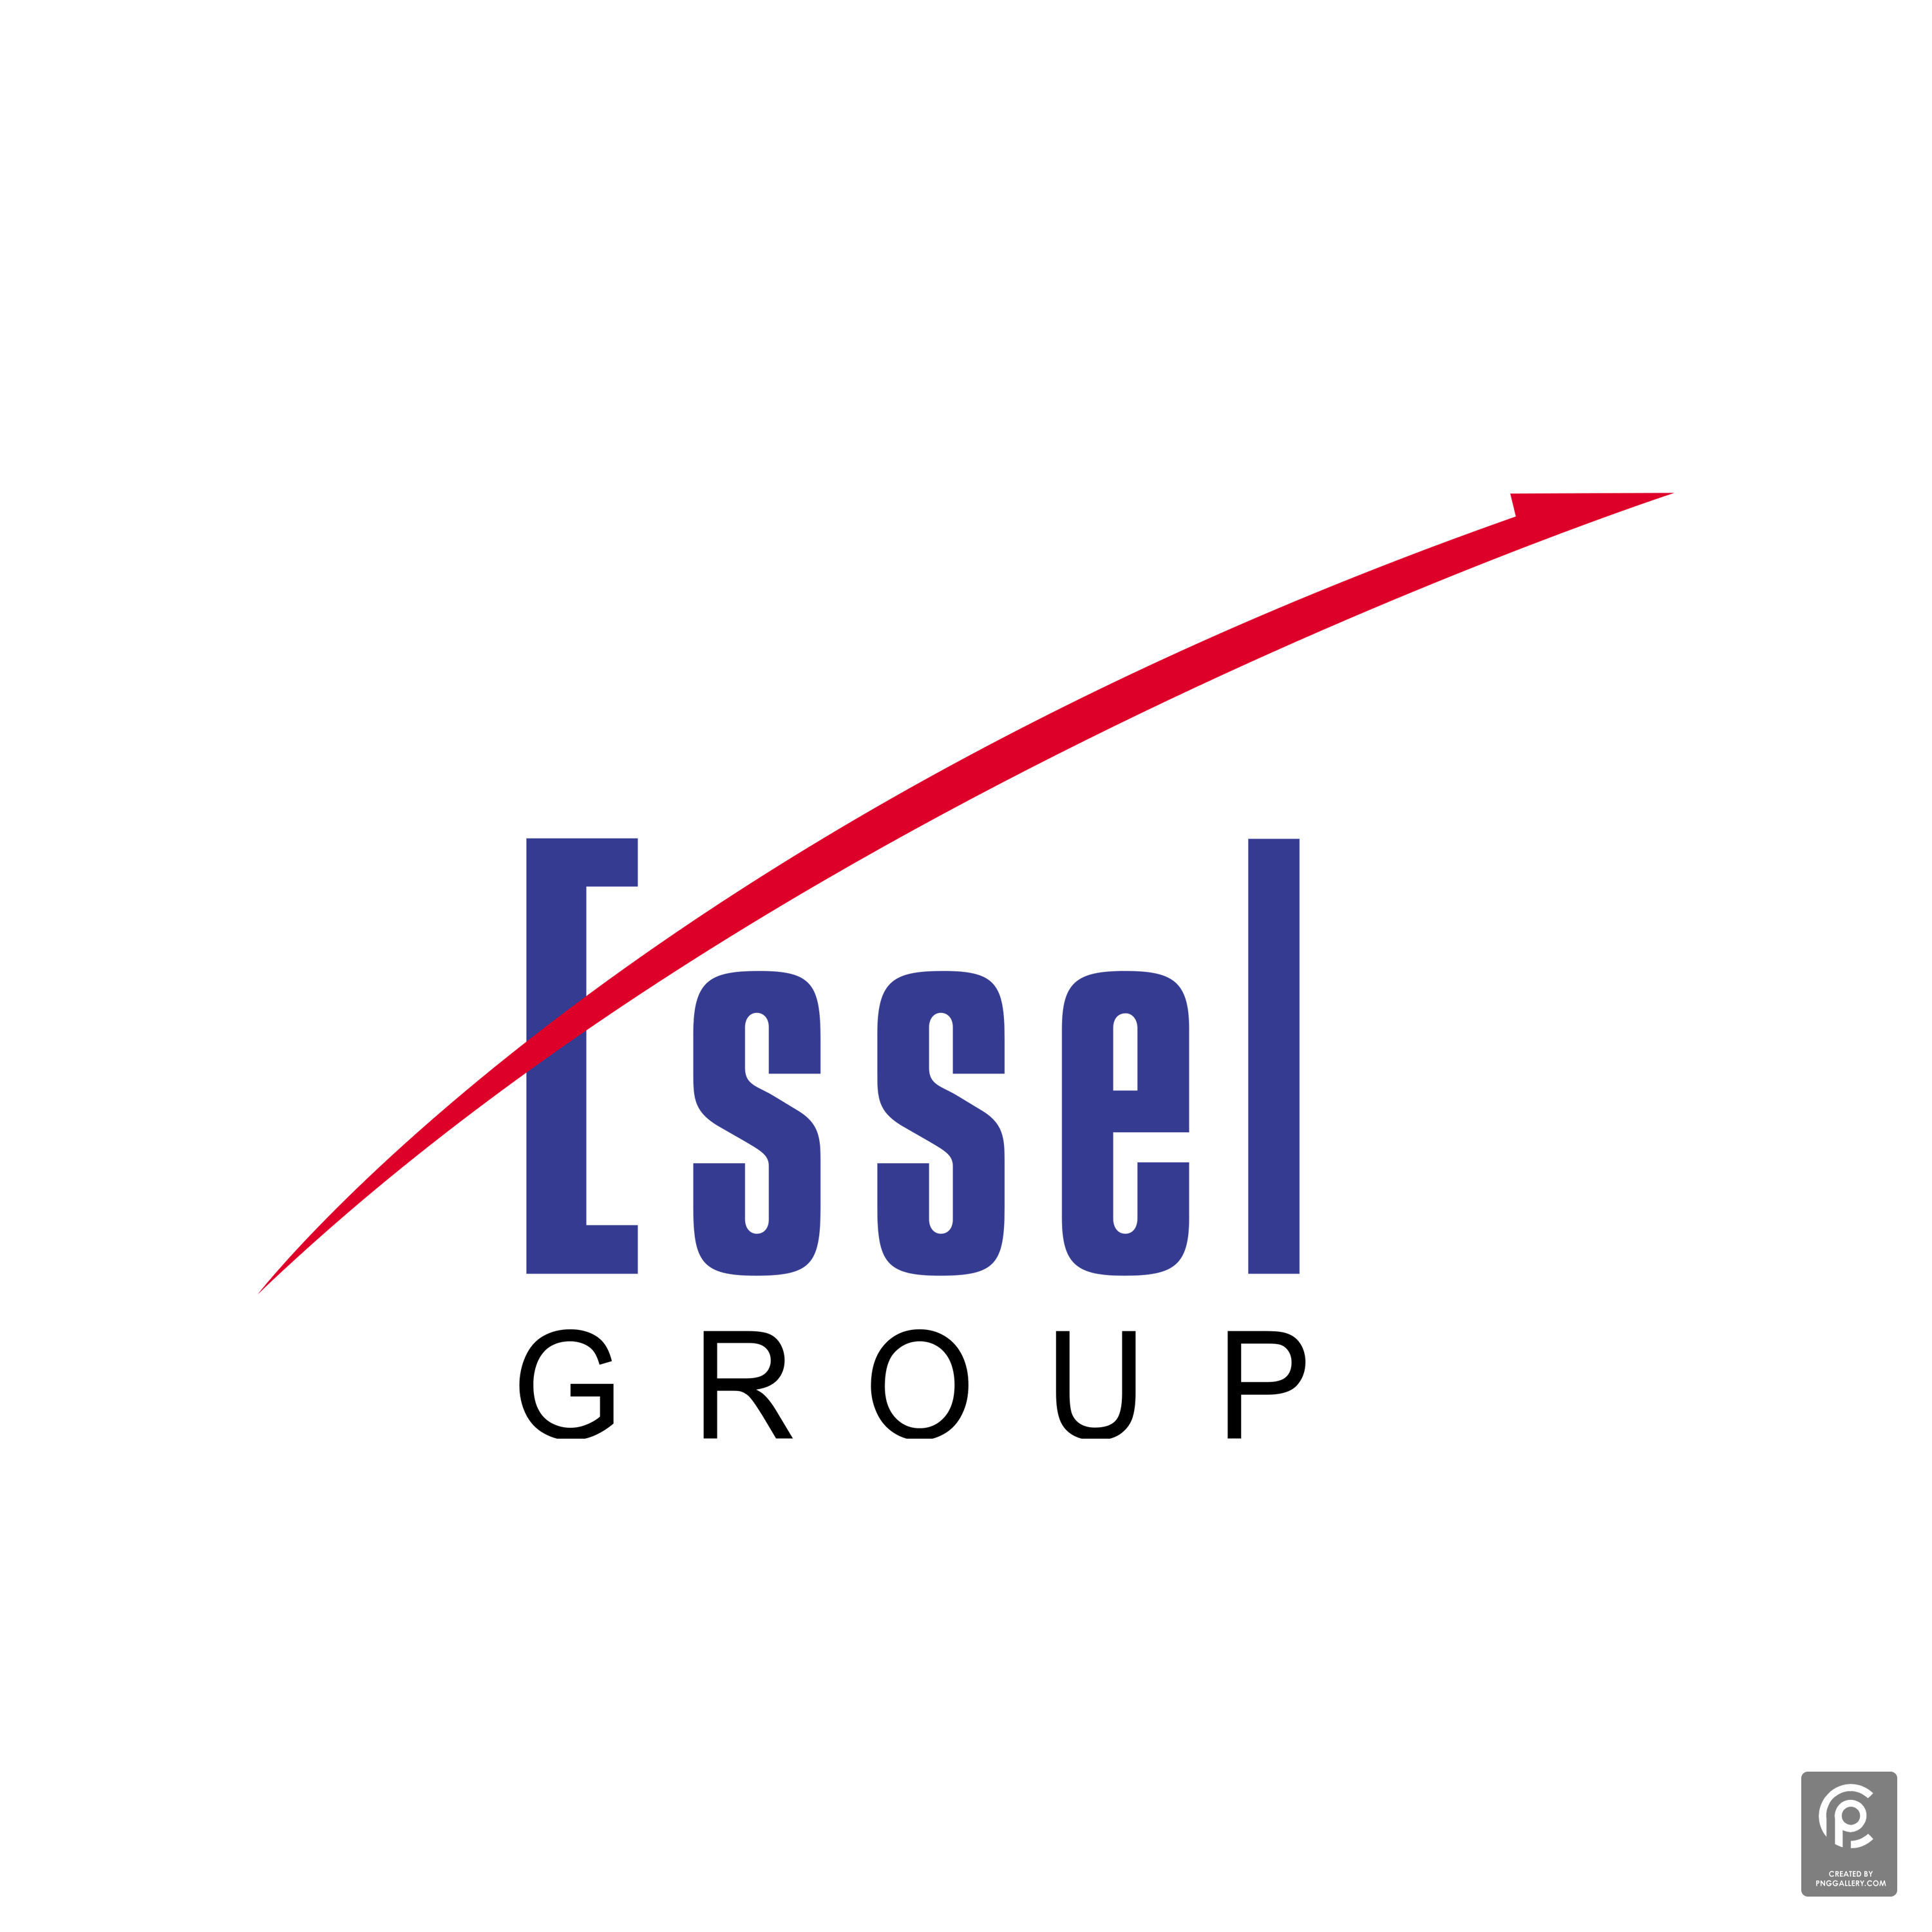 Essel Group Logo Transparent Clipart